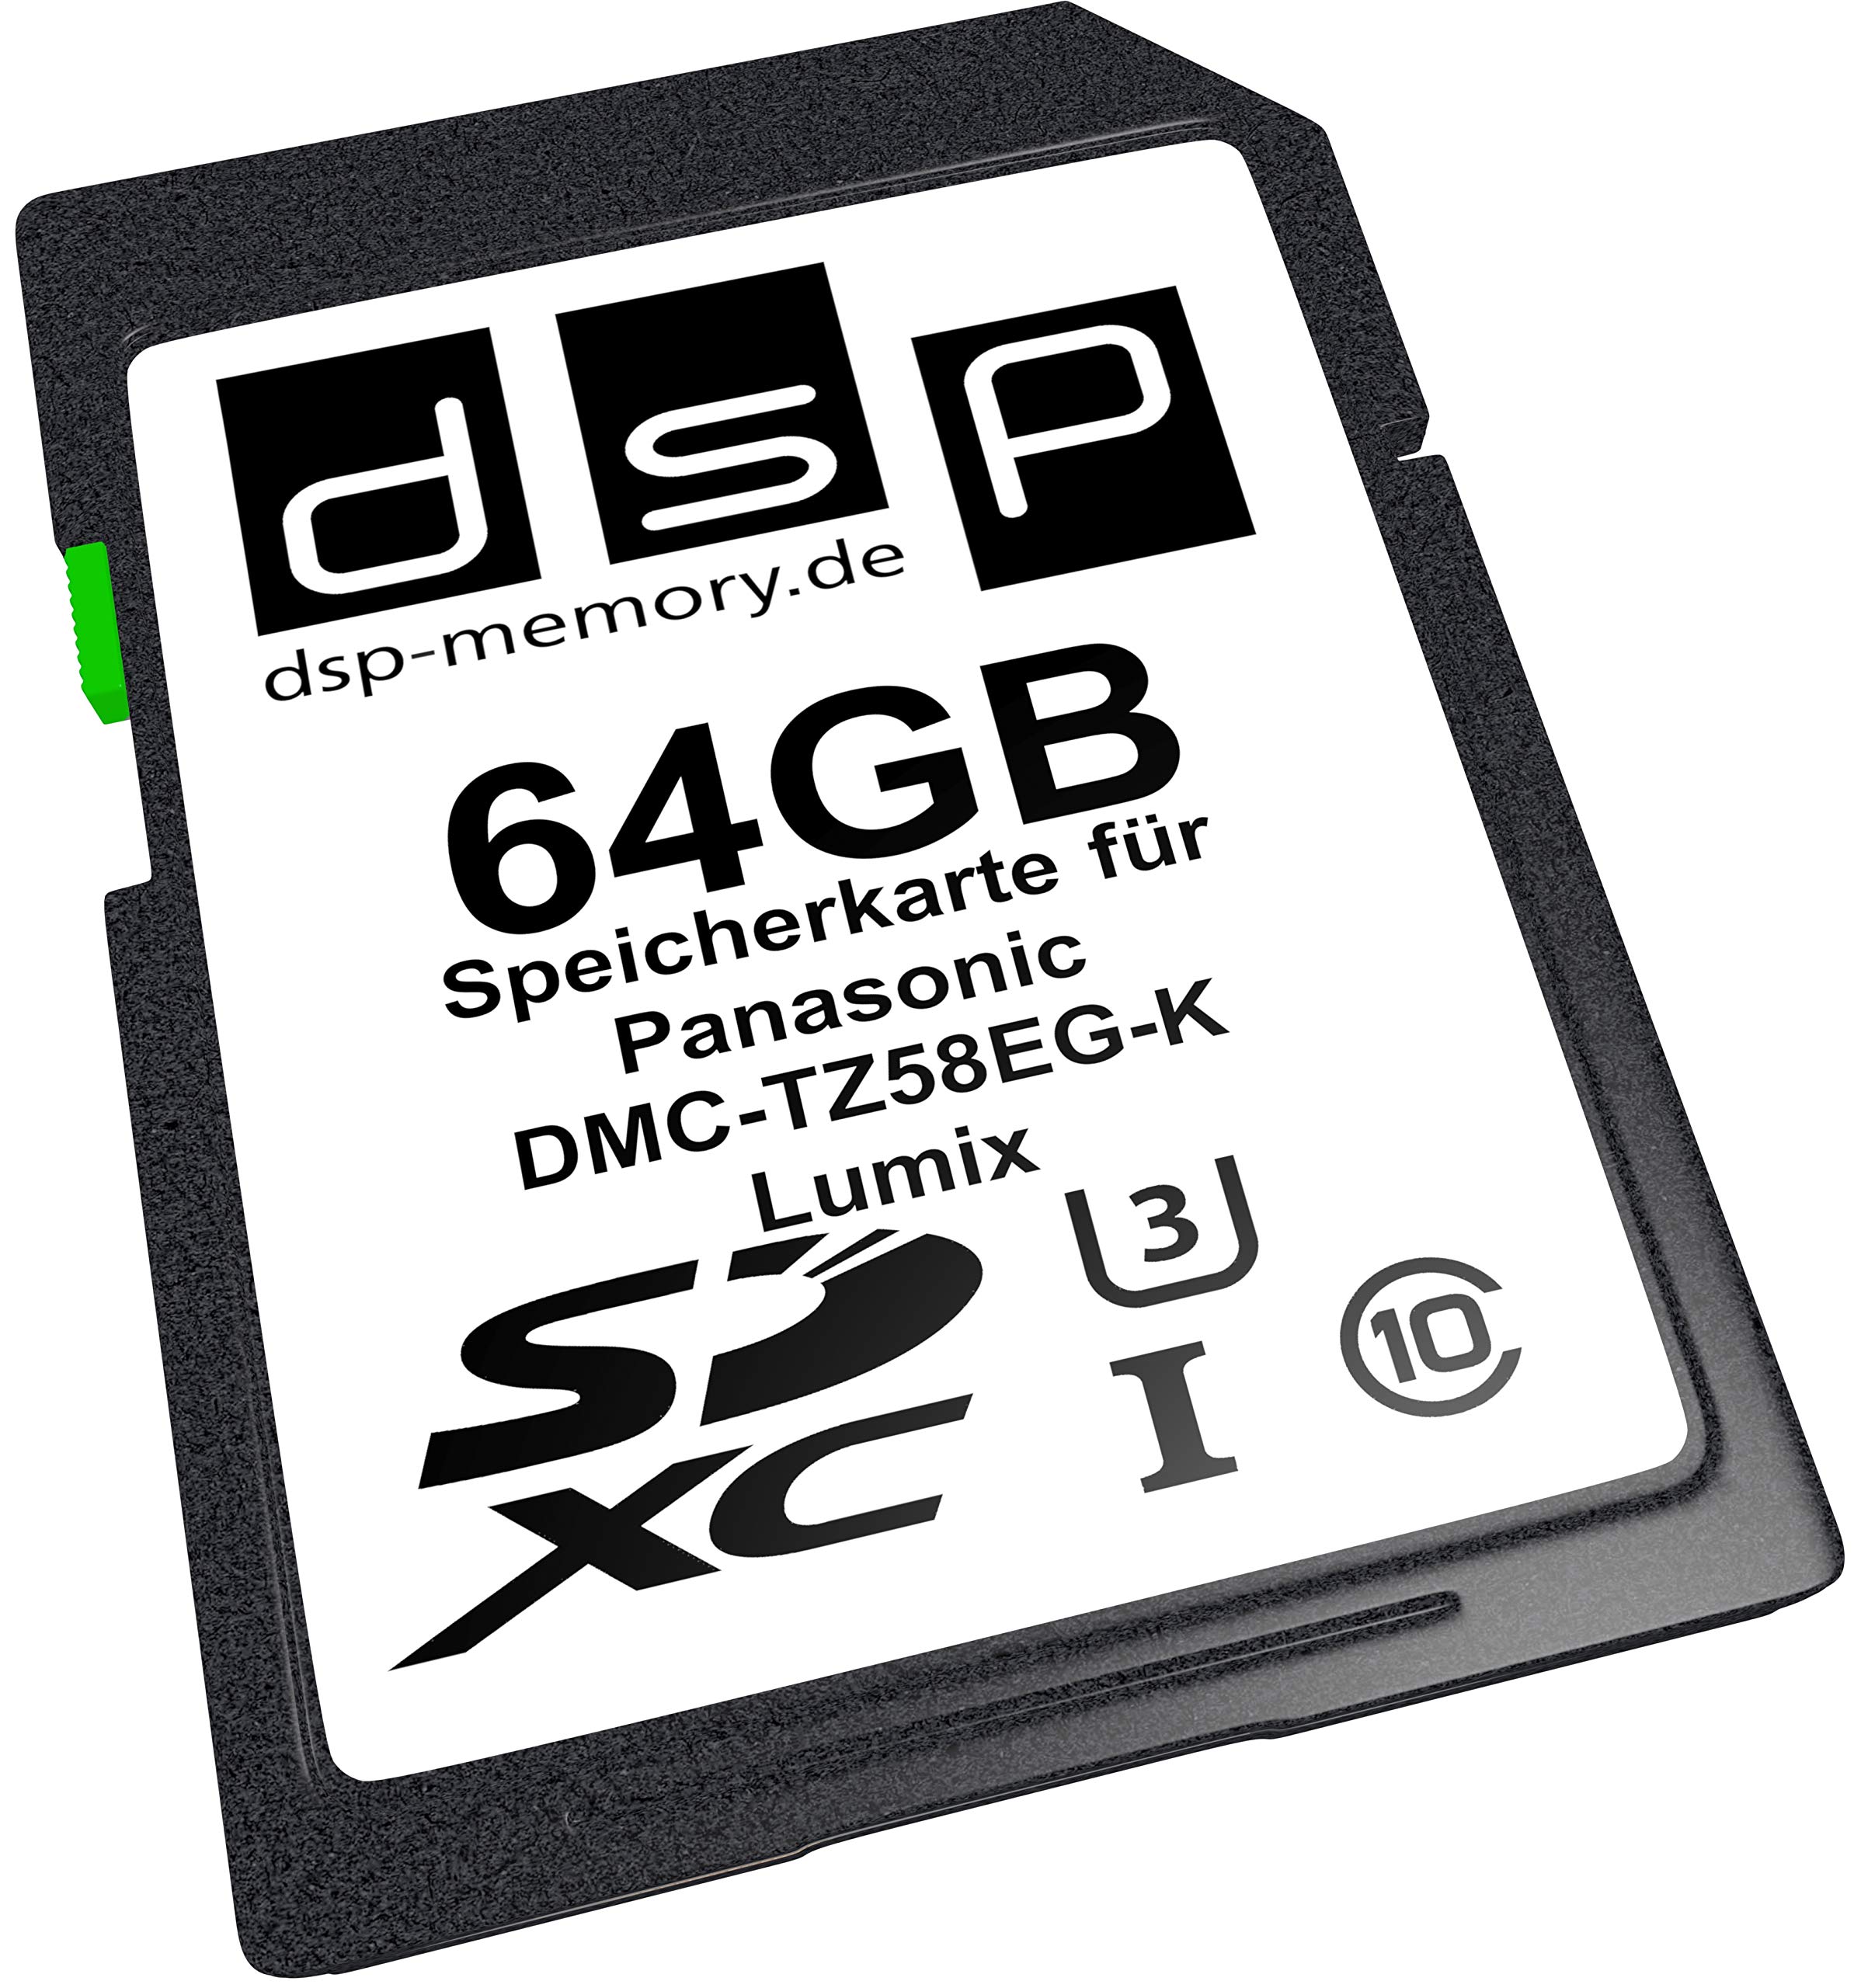 64GB Ultra Highspeed Speicherkarte für Panasonic DMC-TZ58EG-K Lumix Digitalkamera